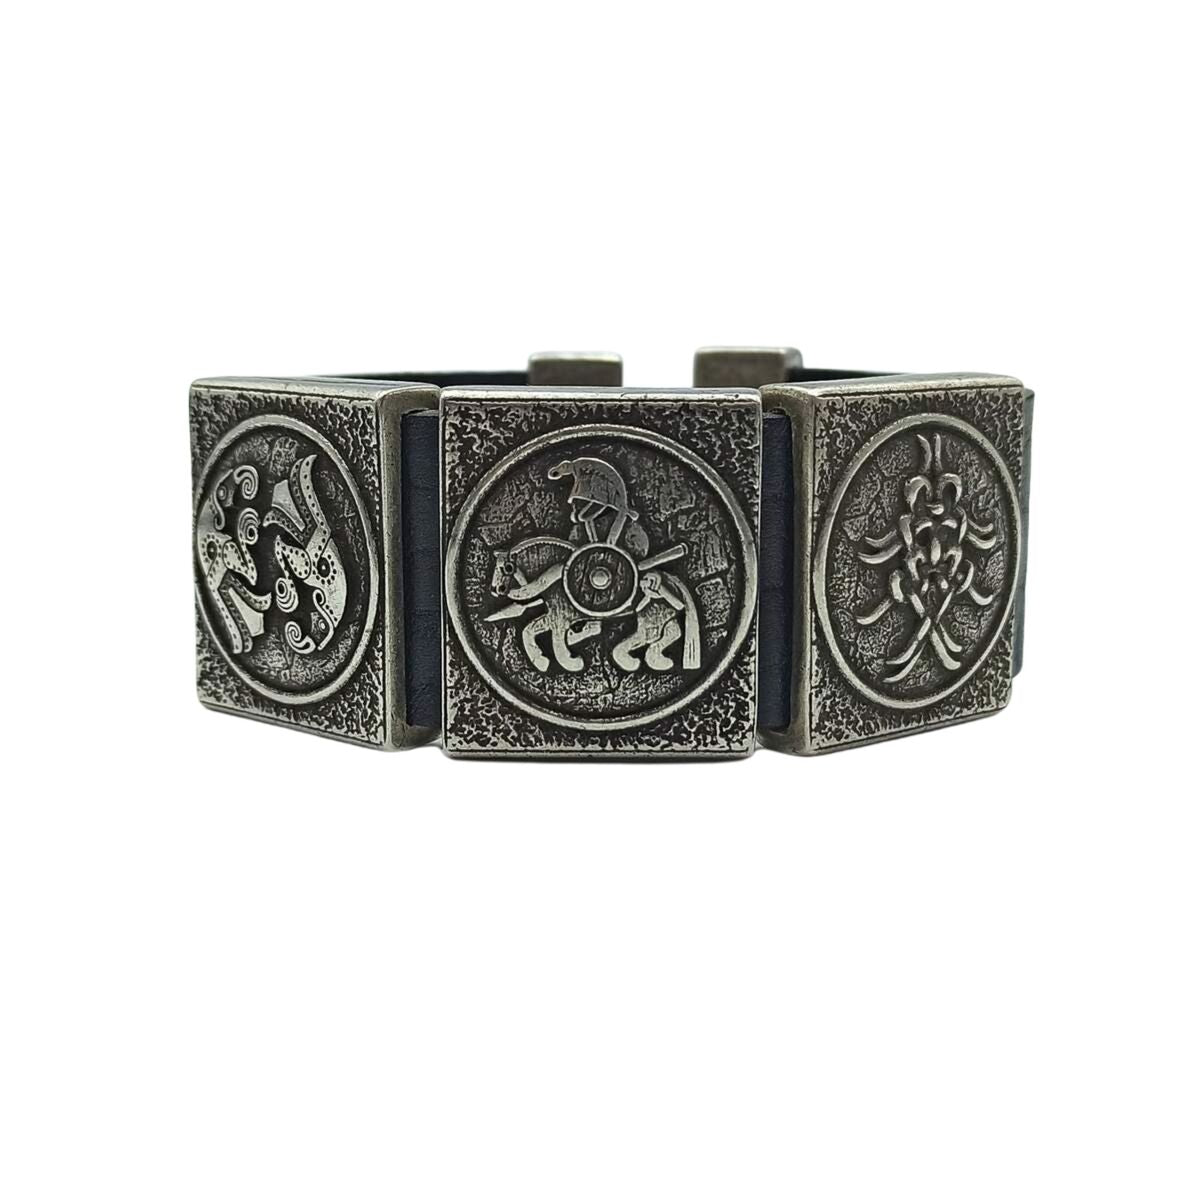 Odin leather wrist cuff bracelet 16 cm | 6.3 inch Silver plated bronze 